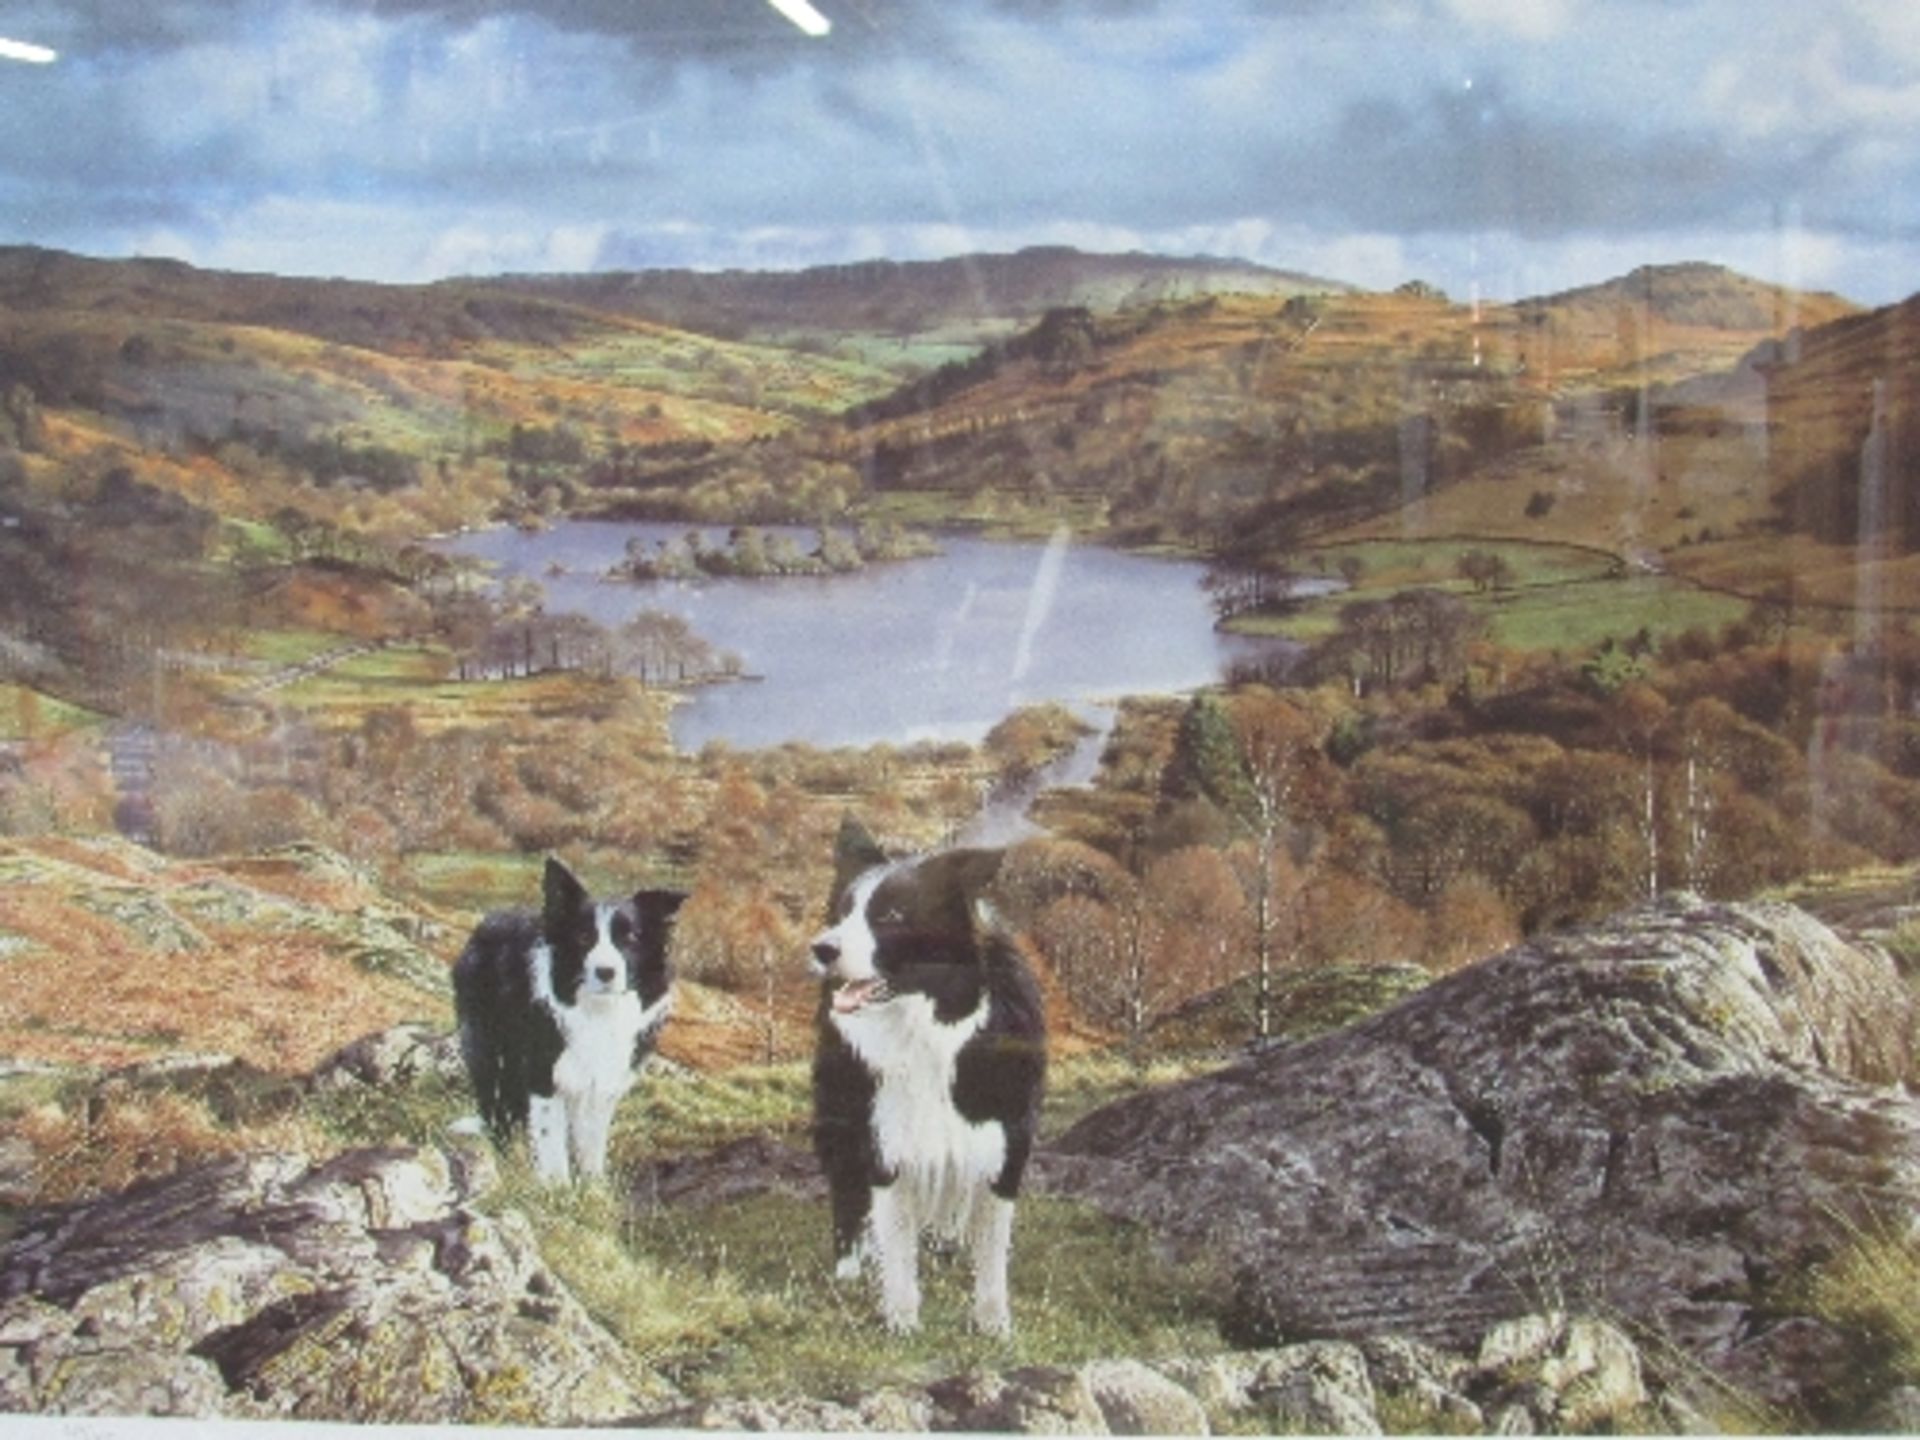 Framed & glazed limited edition print of Collie dogs, signed. Estimate £30-50